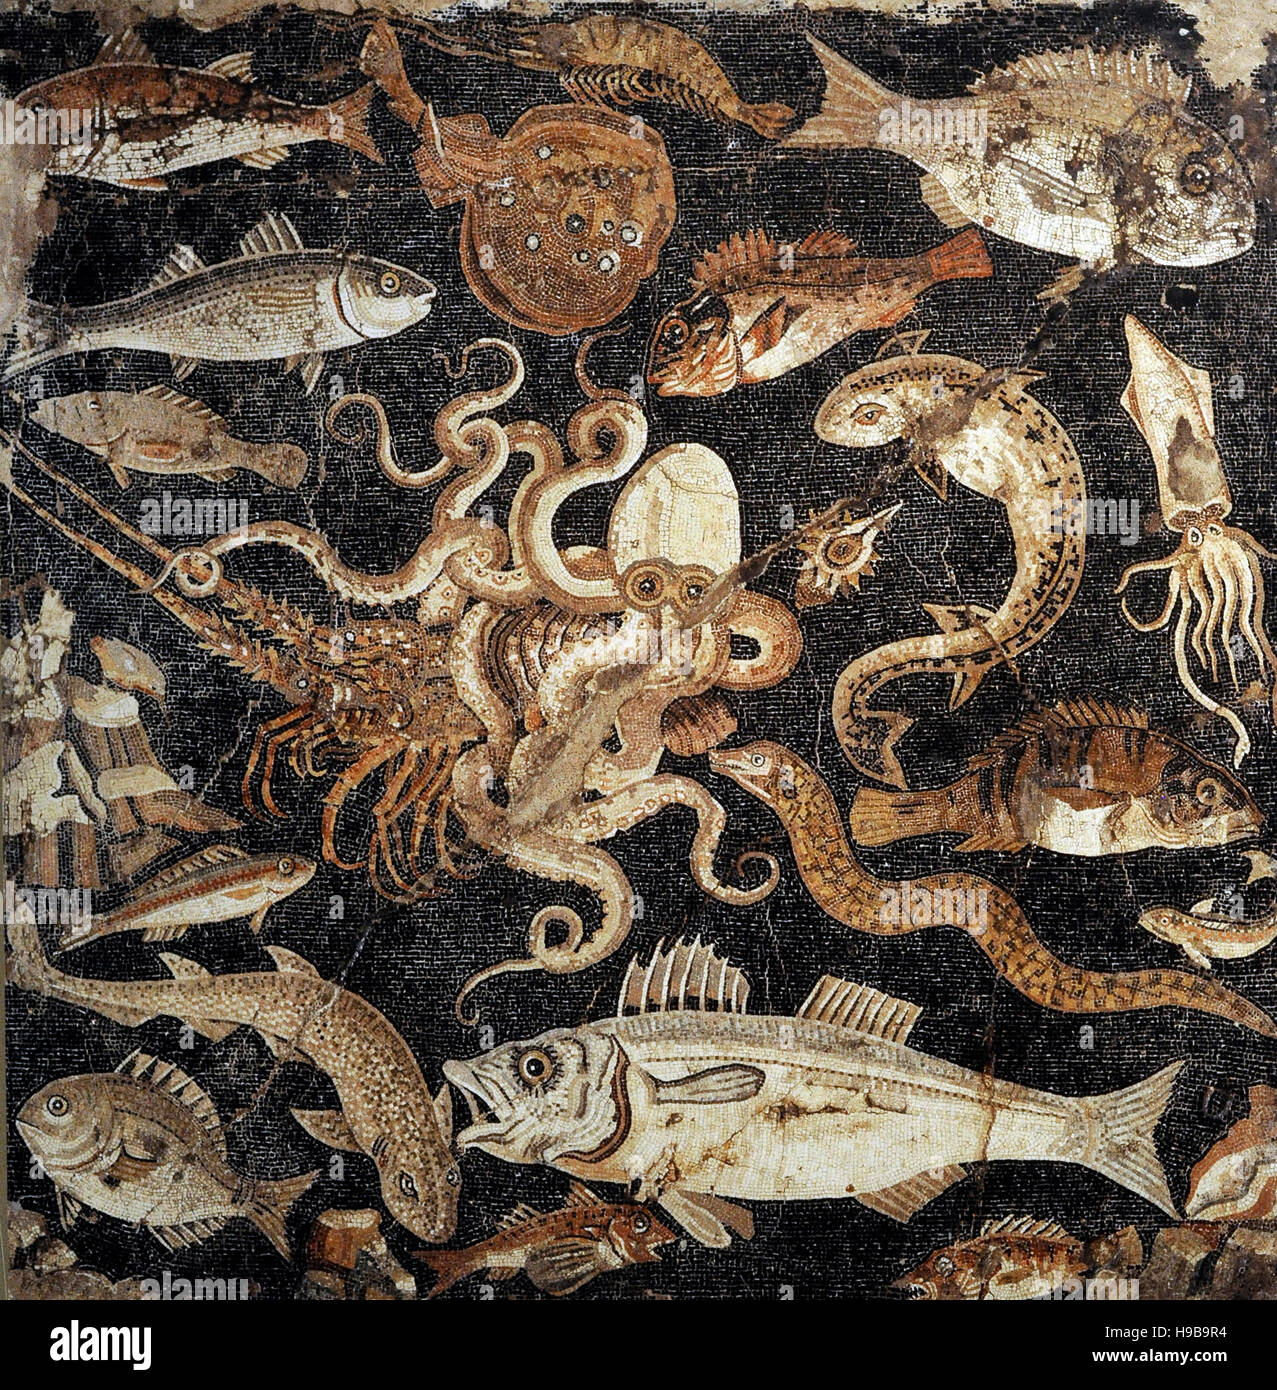 Römisches Mosaik. Marine Tierwelt. Pompeji, Italien. 1. Jh.V.Chr.  Haus l, Aelius Magnus (VIII, 2, 16). Nationales Archäologisches Museum, Naples. Italien. Stockfoto